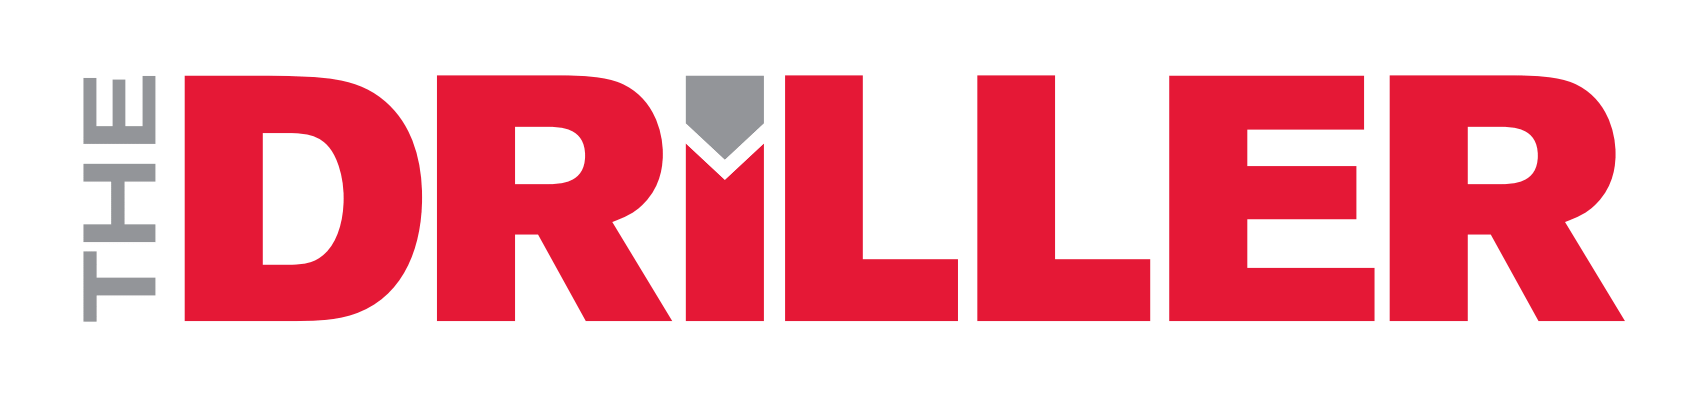 The Driller logo